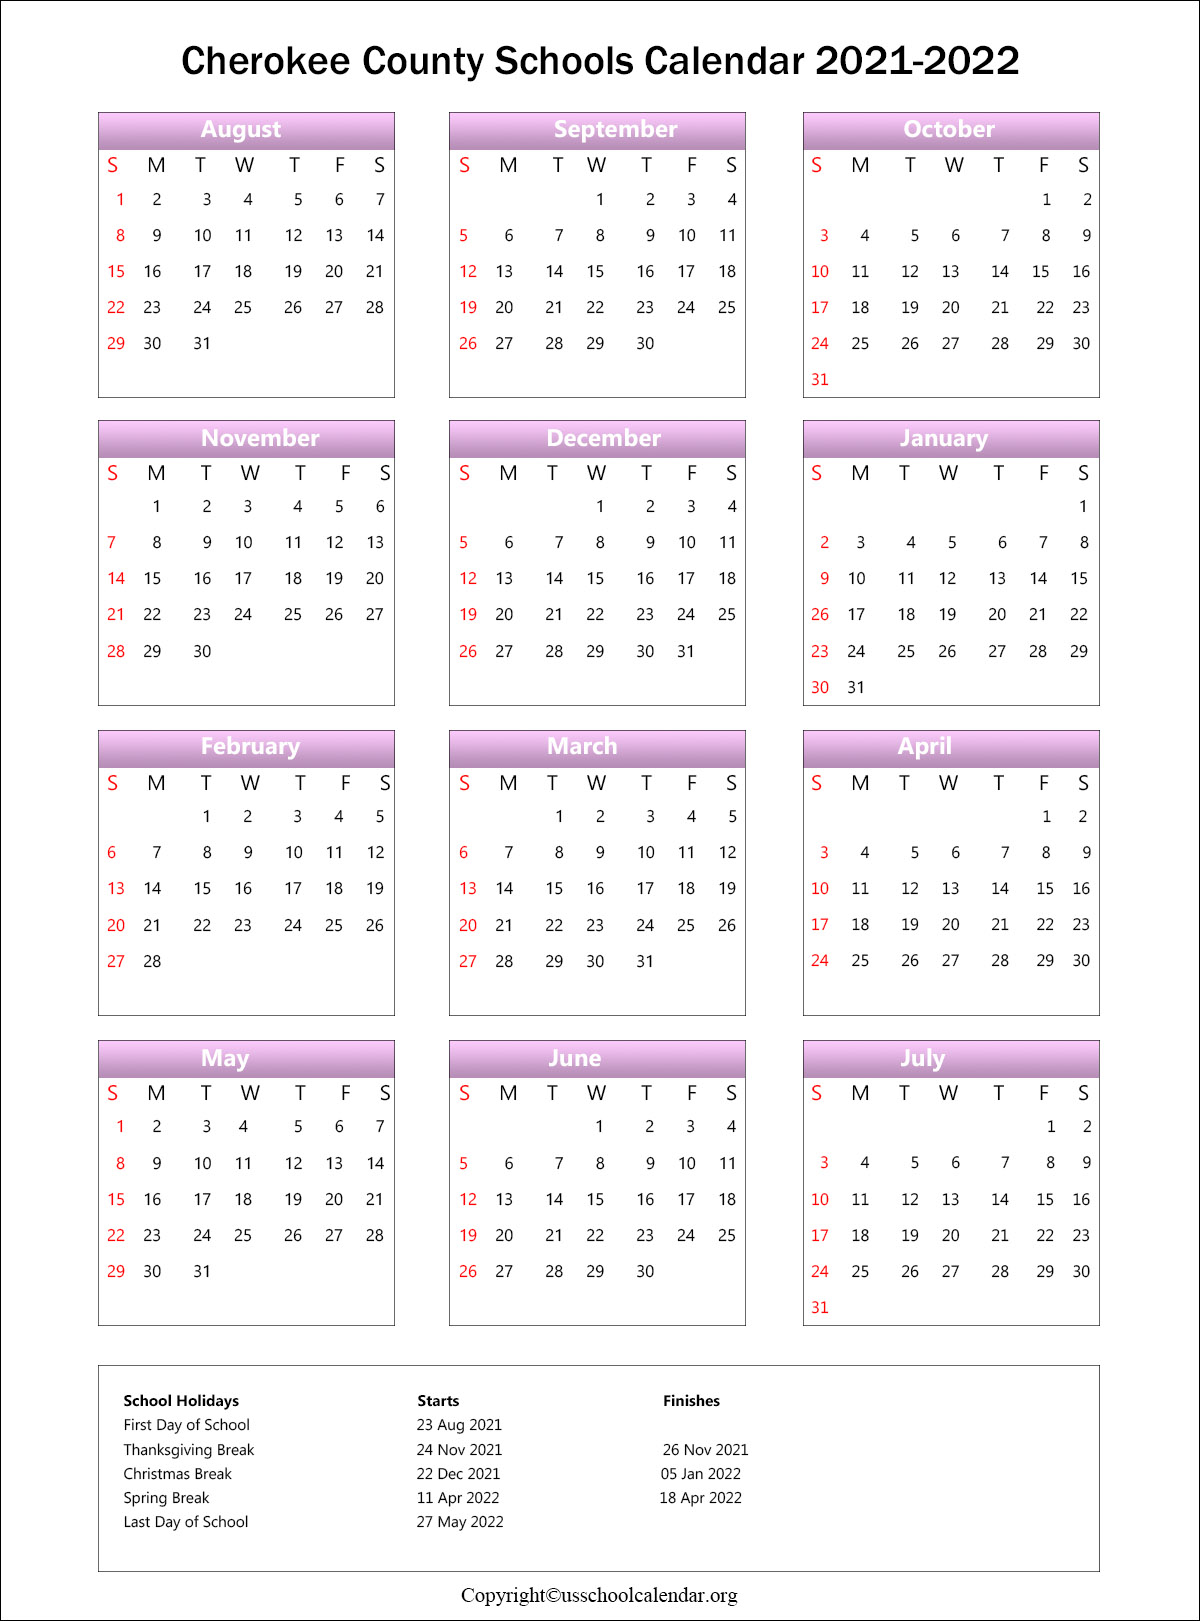 Cherokee County School Calendar with Holidays 2021-2022